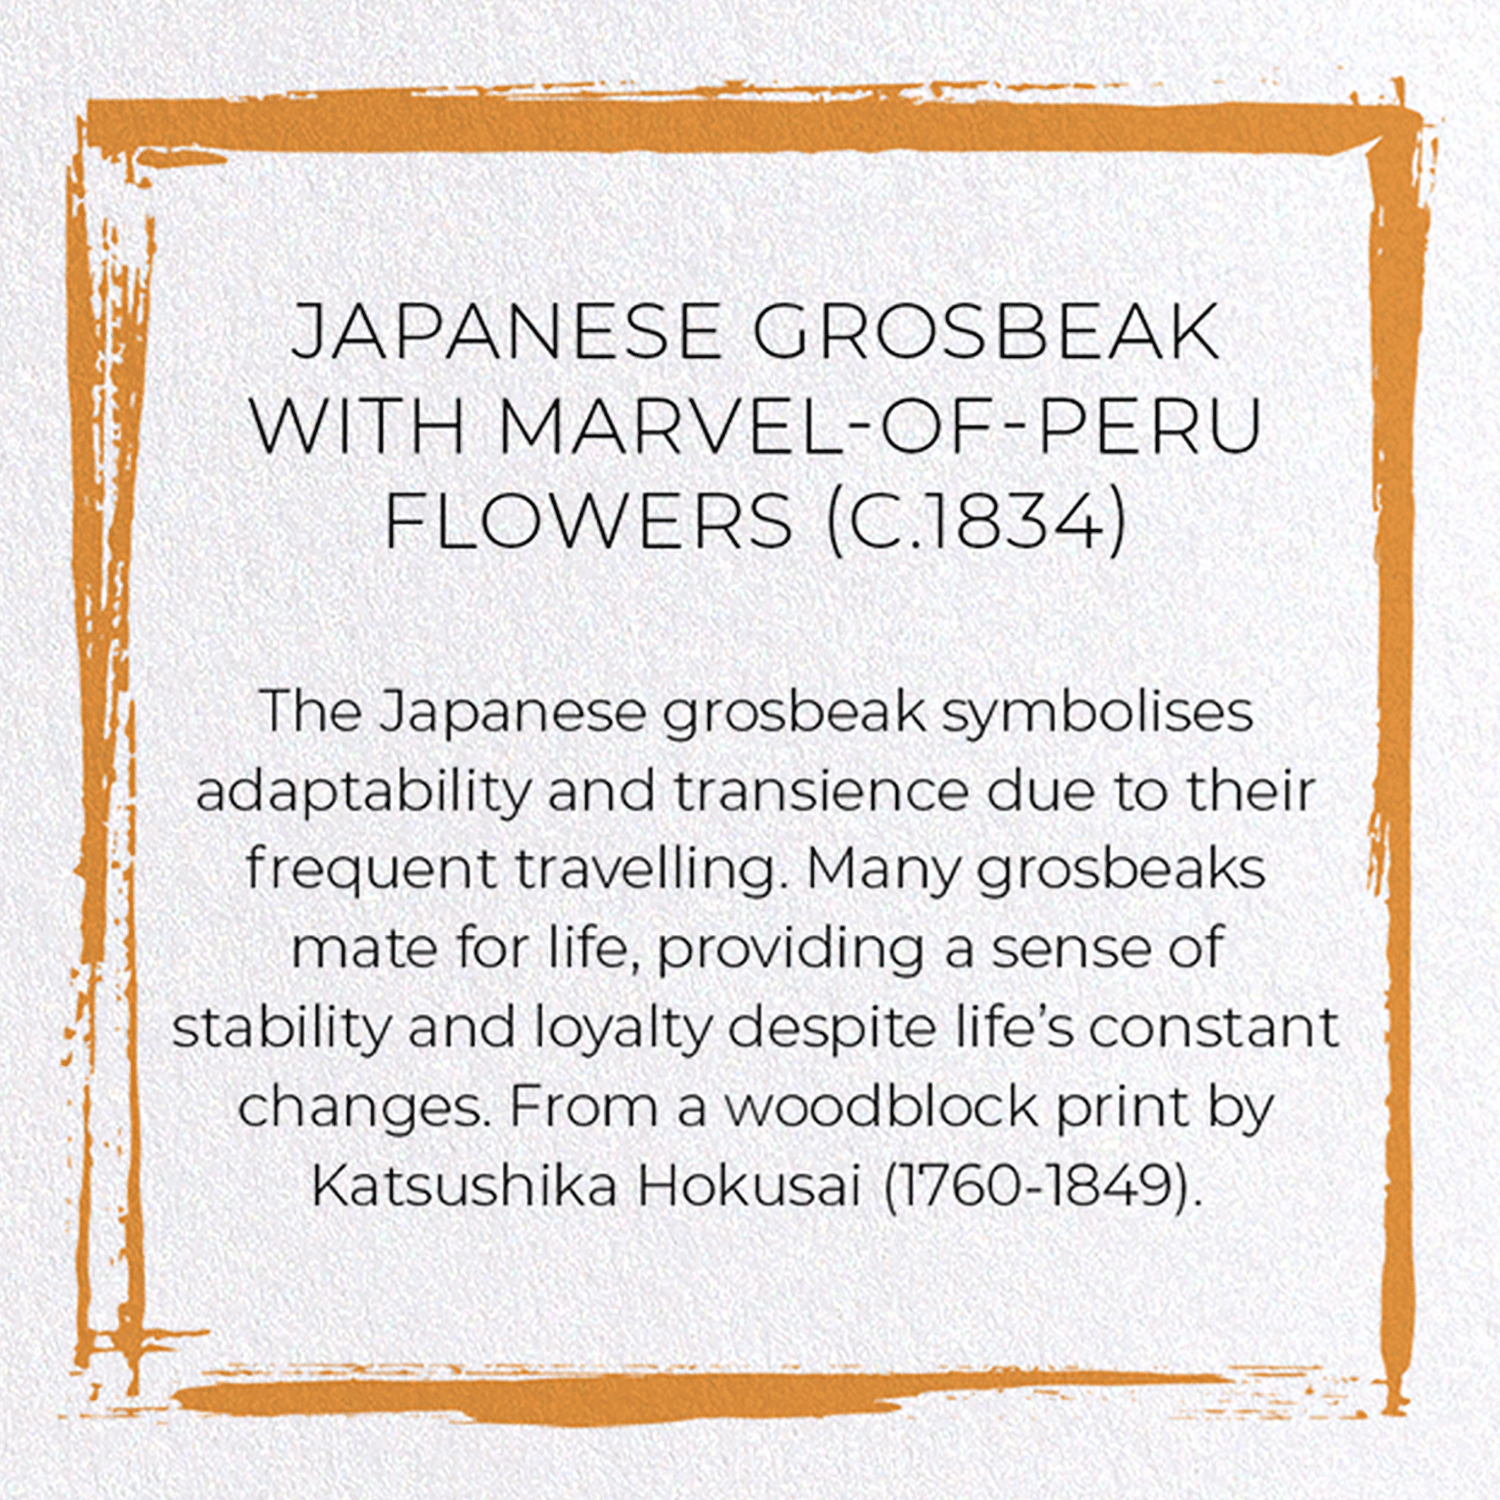 JAPANESE GROSBEAK WITH MARVEL-OF-PERU FLOWERS (C.1834)